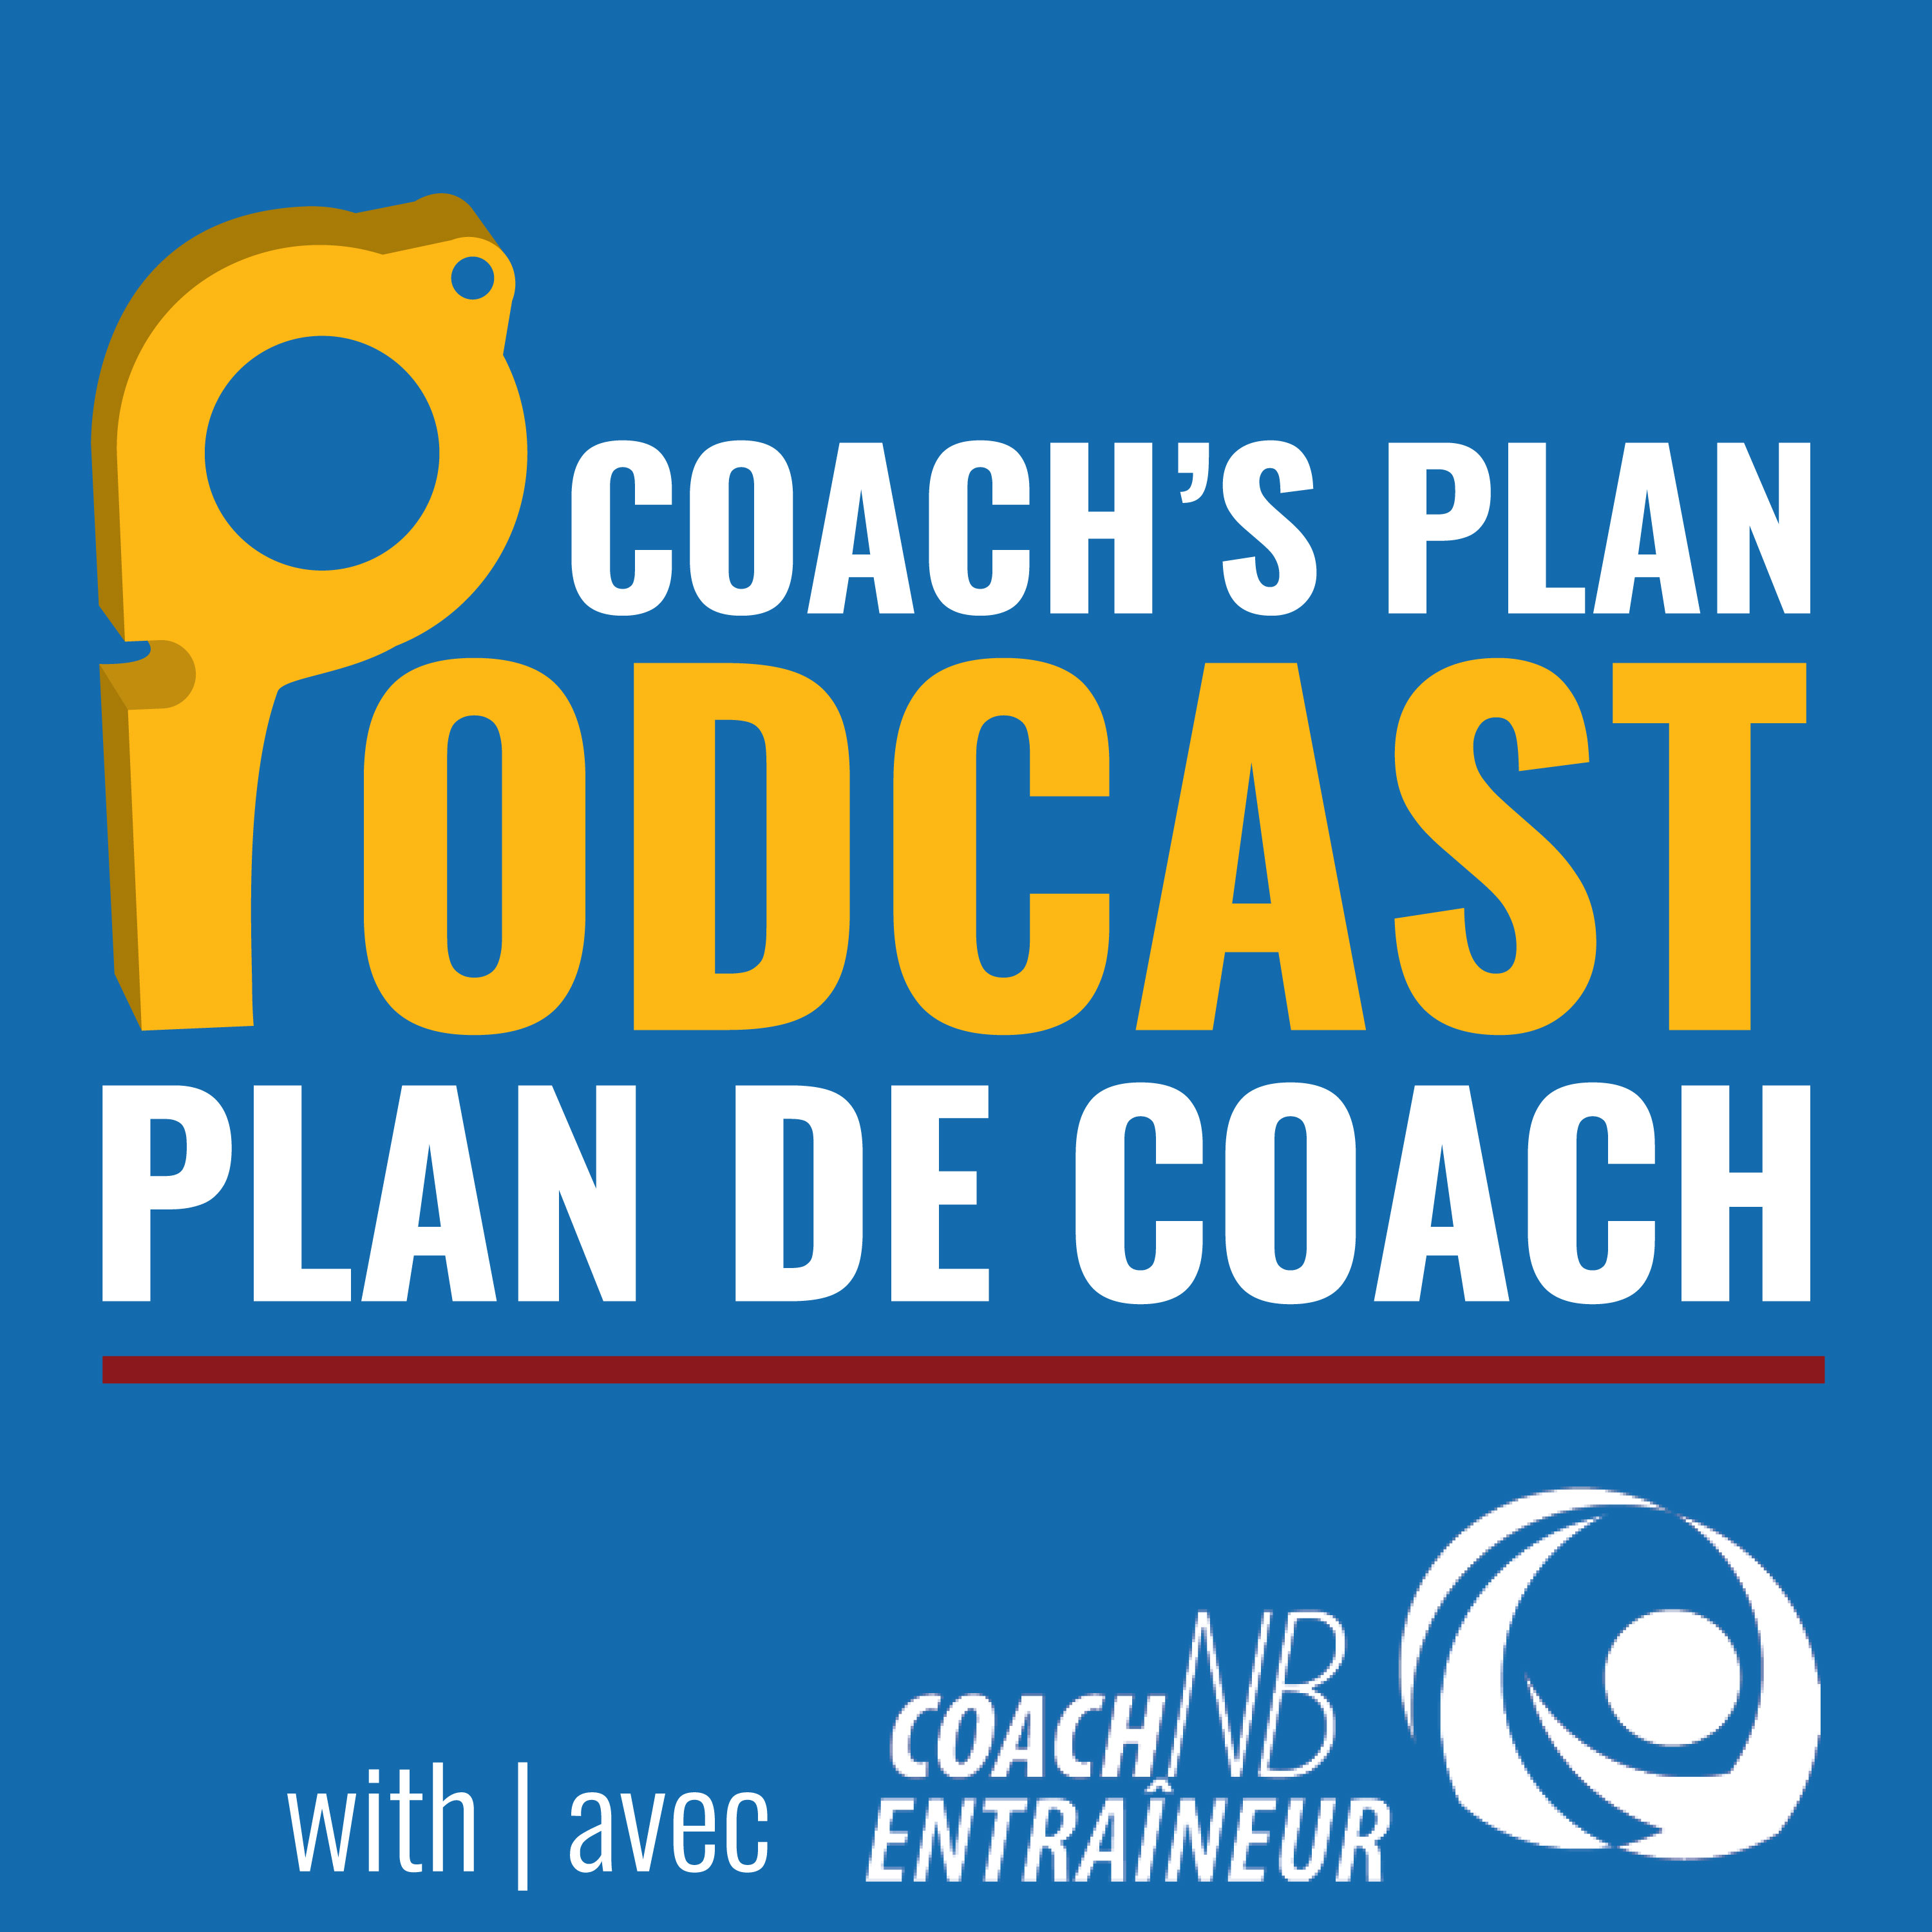 Coach's Plan Podcast Plan de Coach